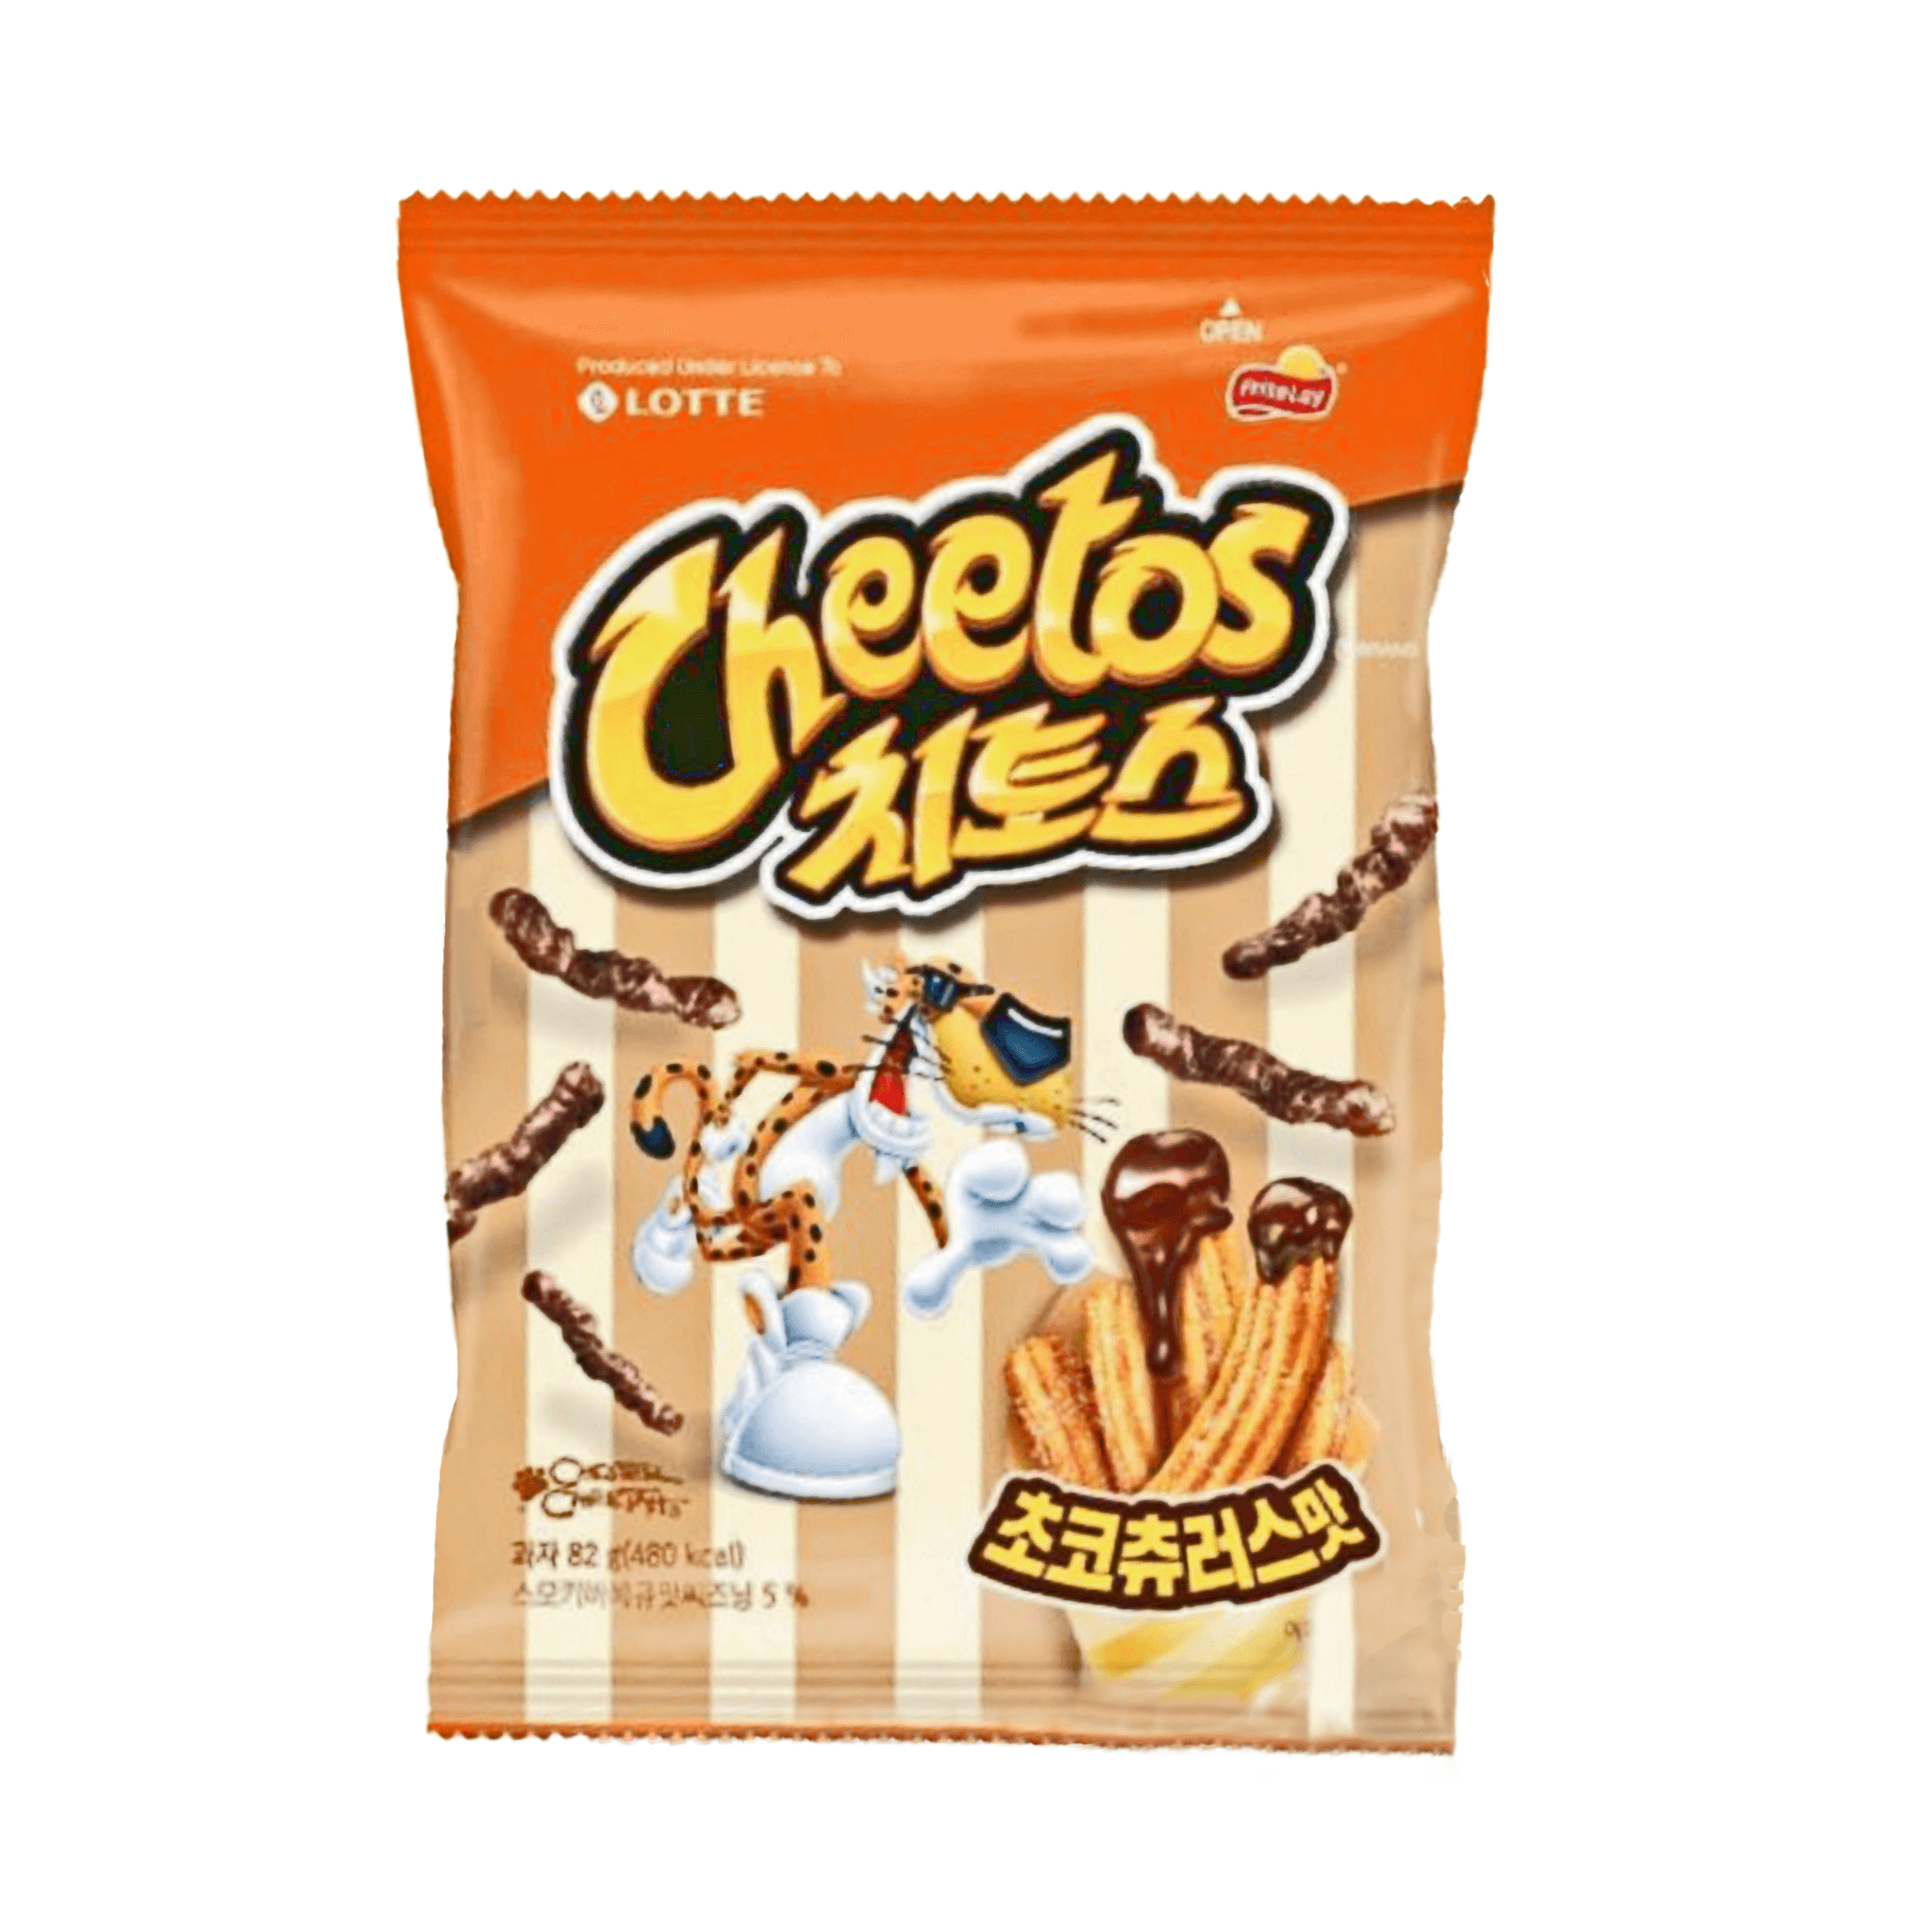 Cheetos Chocolate Churro - Korea - Sweet Exotics